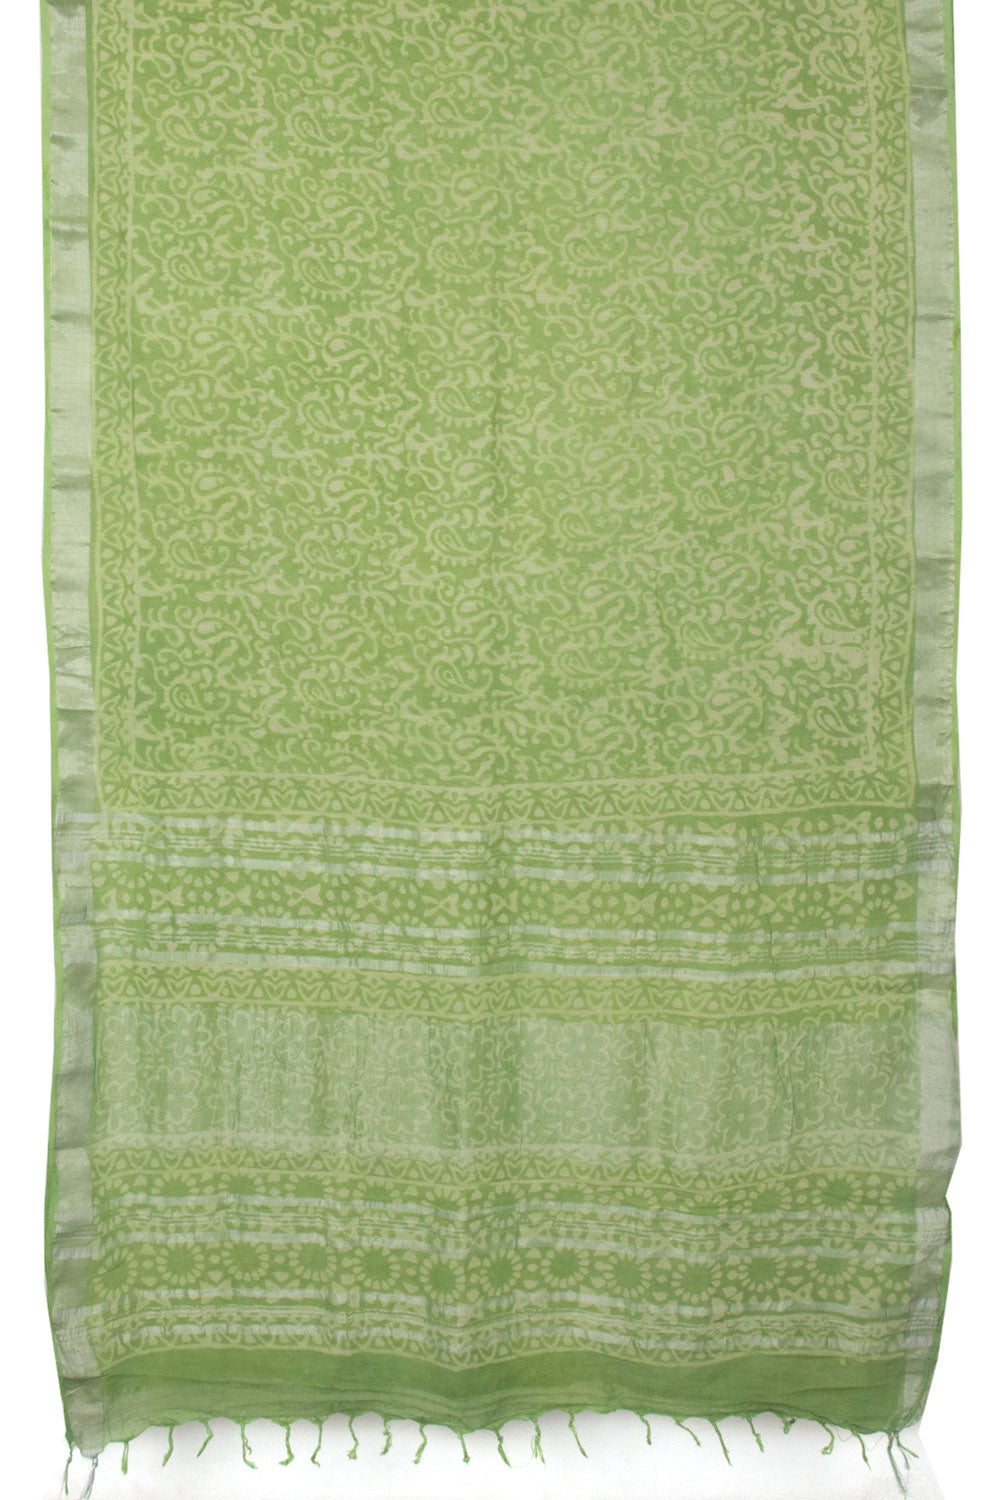 Green Hand Block Printed Linen saree - Avishya